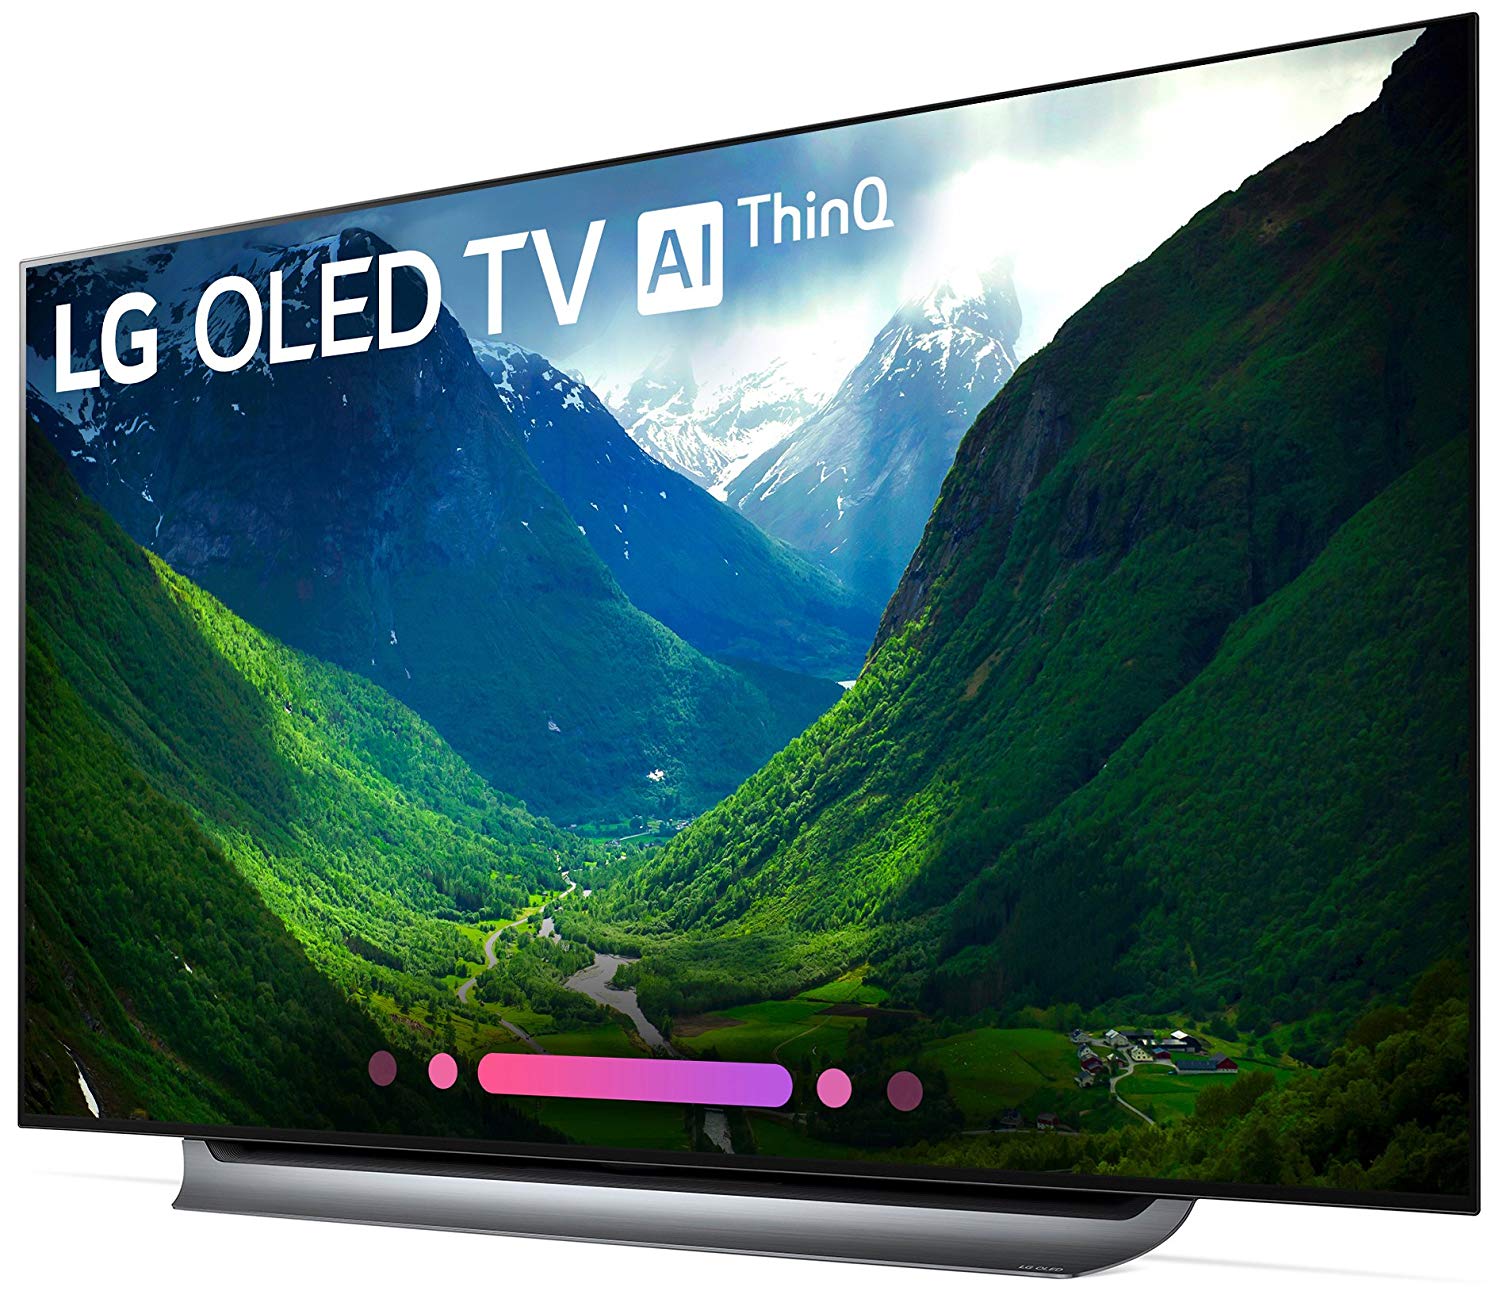 LG OLED65C8PUA 65-इंच 4K अल्ट्रा HD स्मार्ट OLED टीवी (2018 मॉडल)